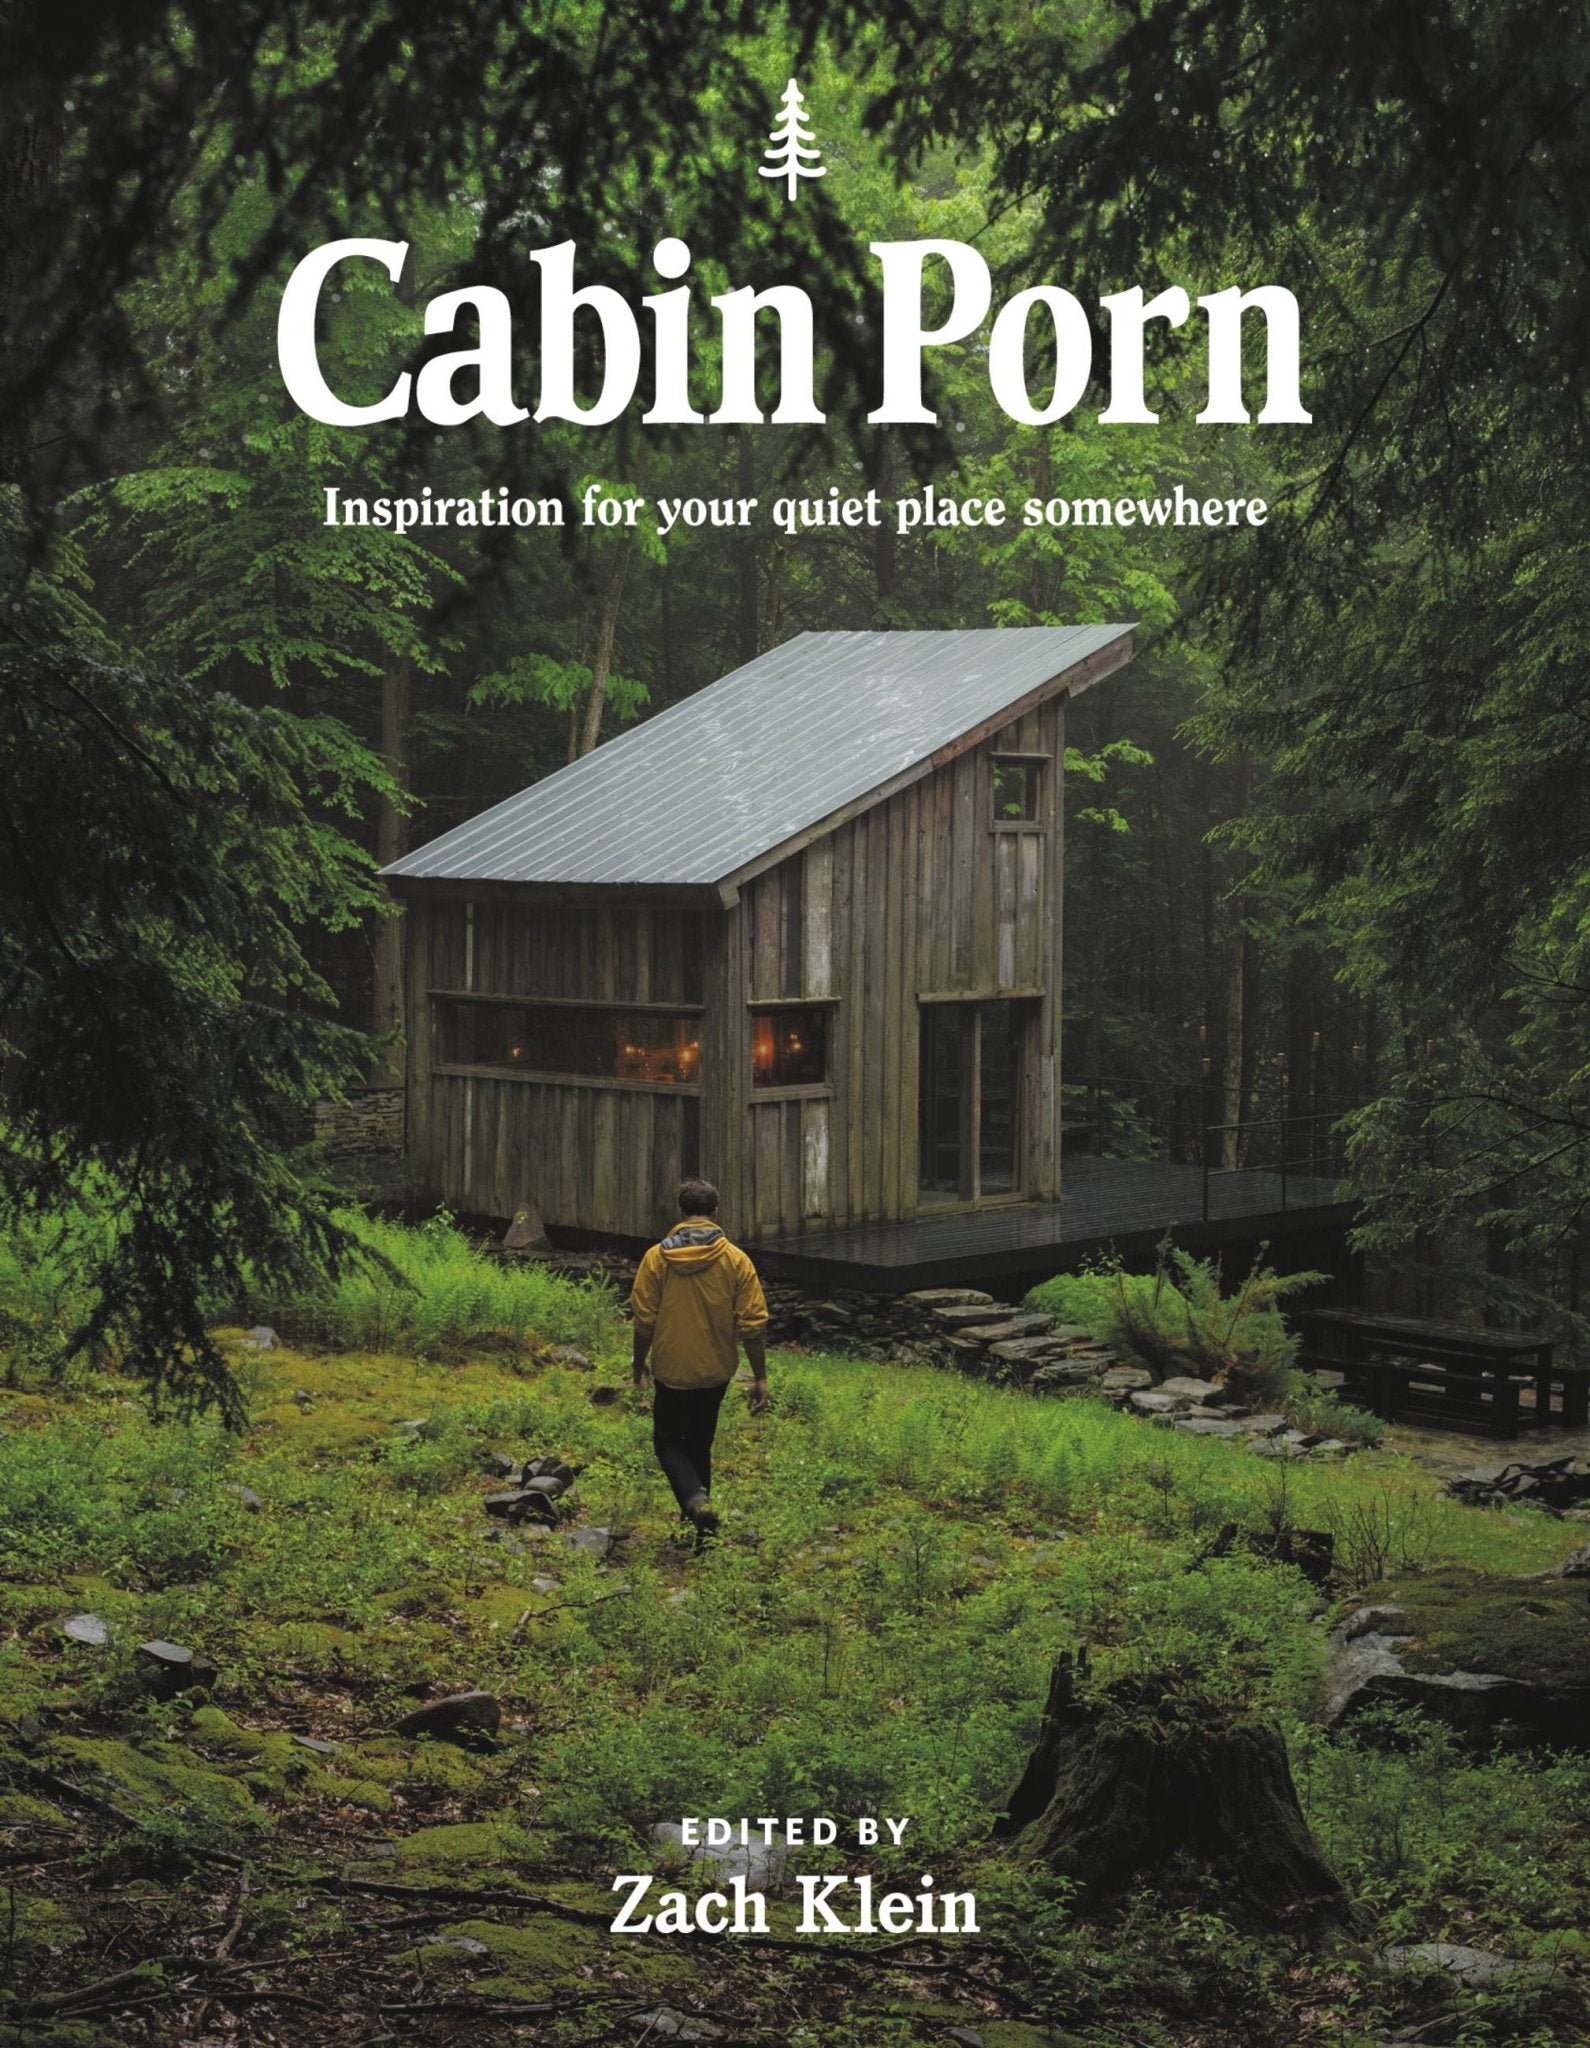 cabin-porn-book-117631.jpg